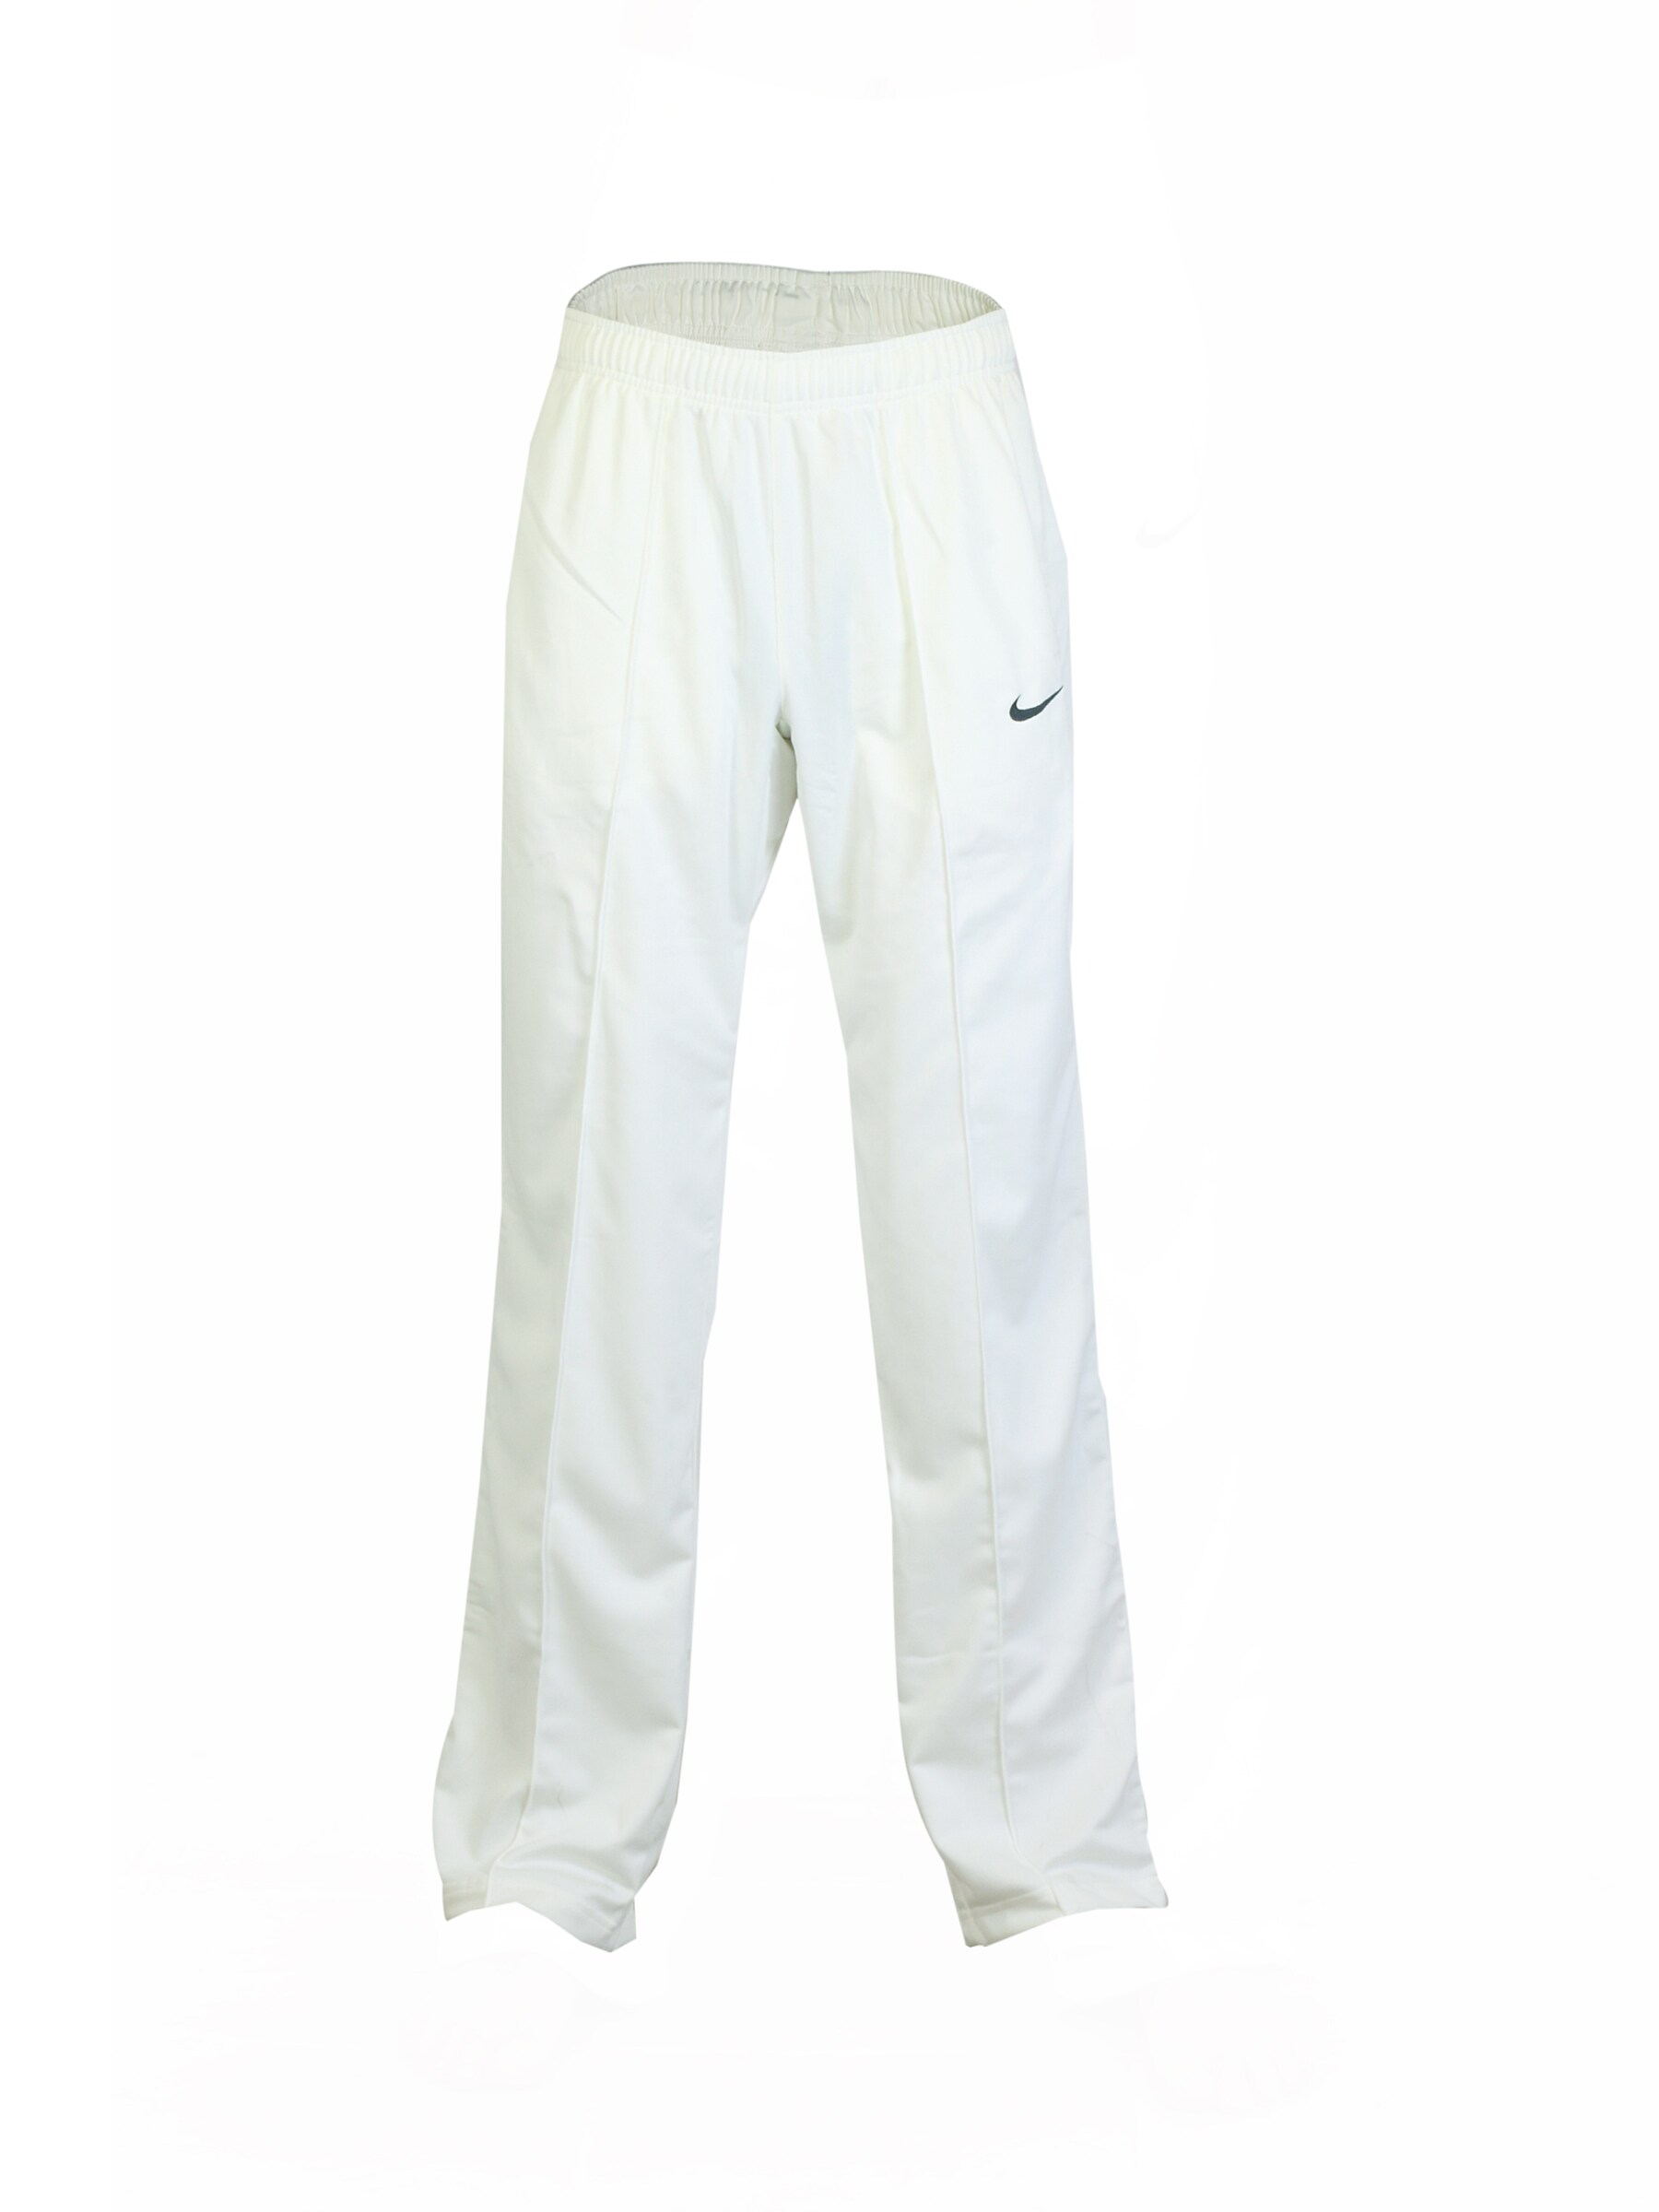 Nike Men Cricket Off White Track Pants